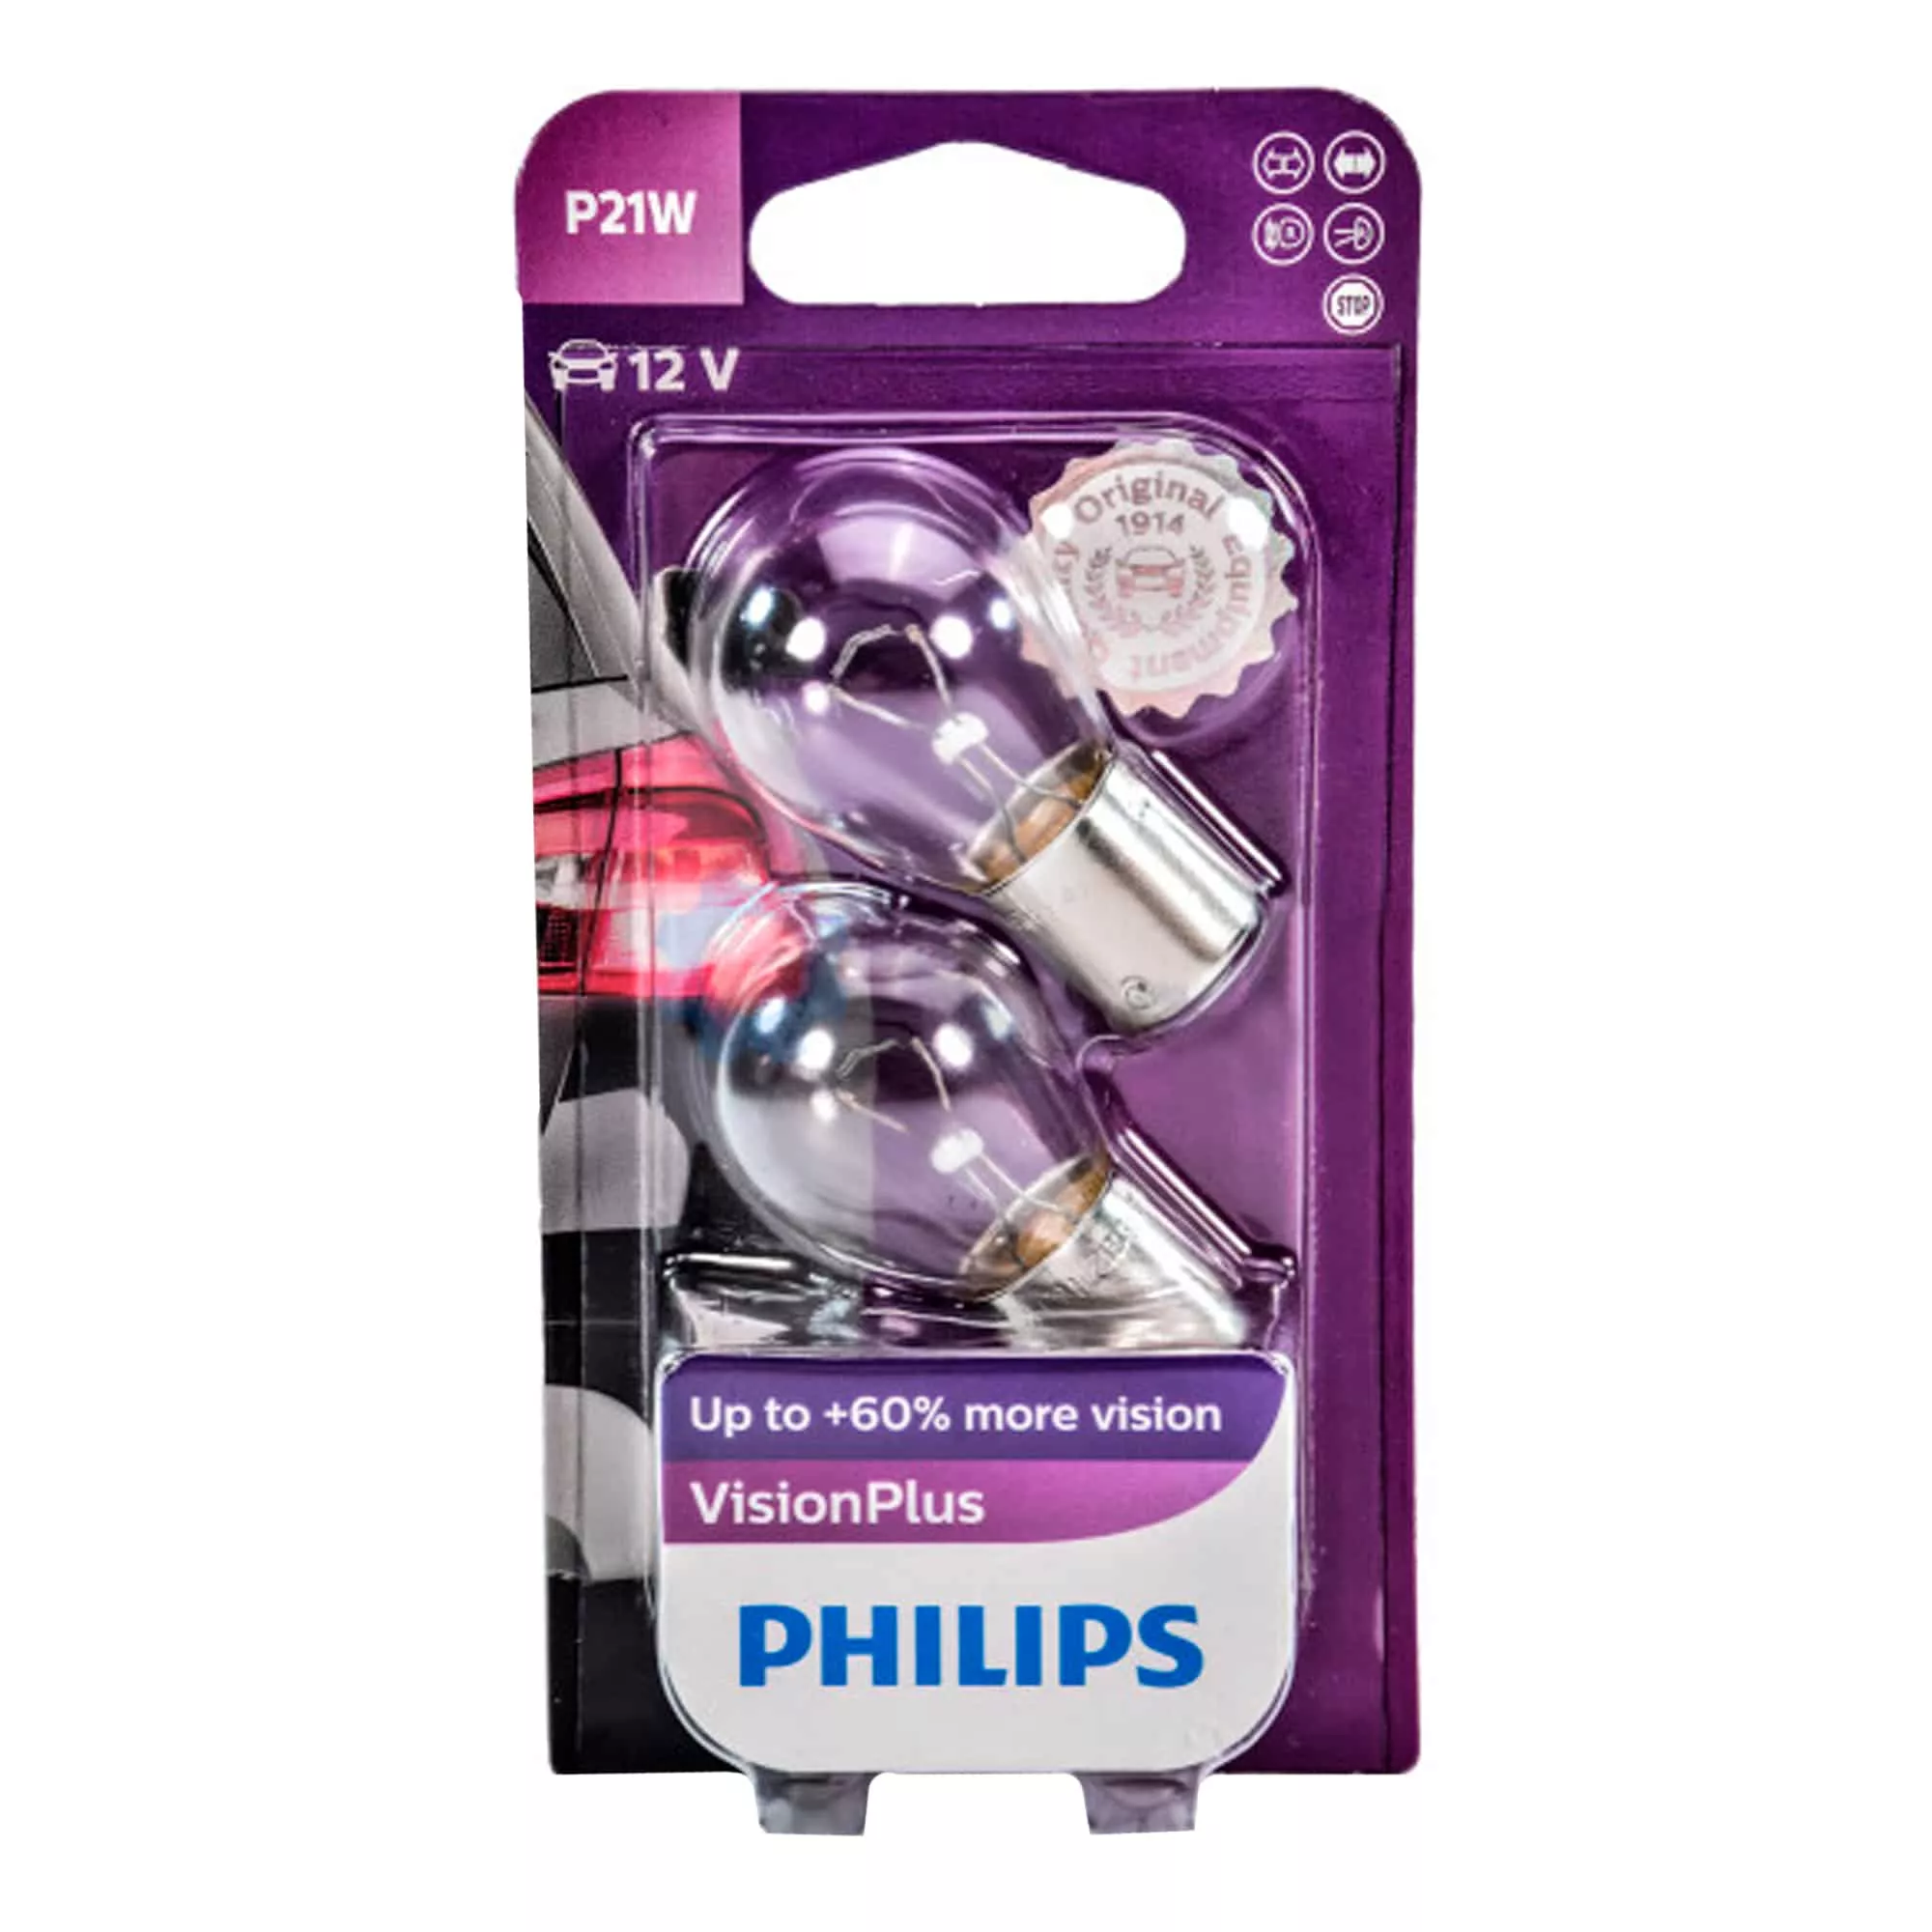 Лампа Philips VisionPlus P21W 12V 21W 12498VPB2